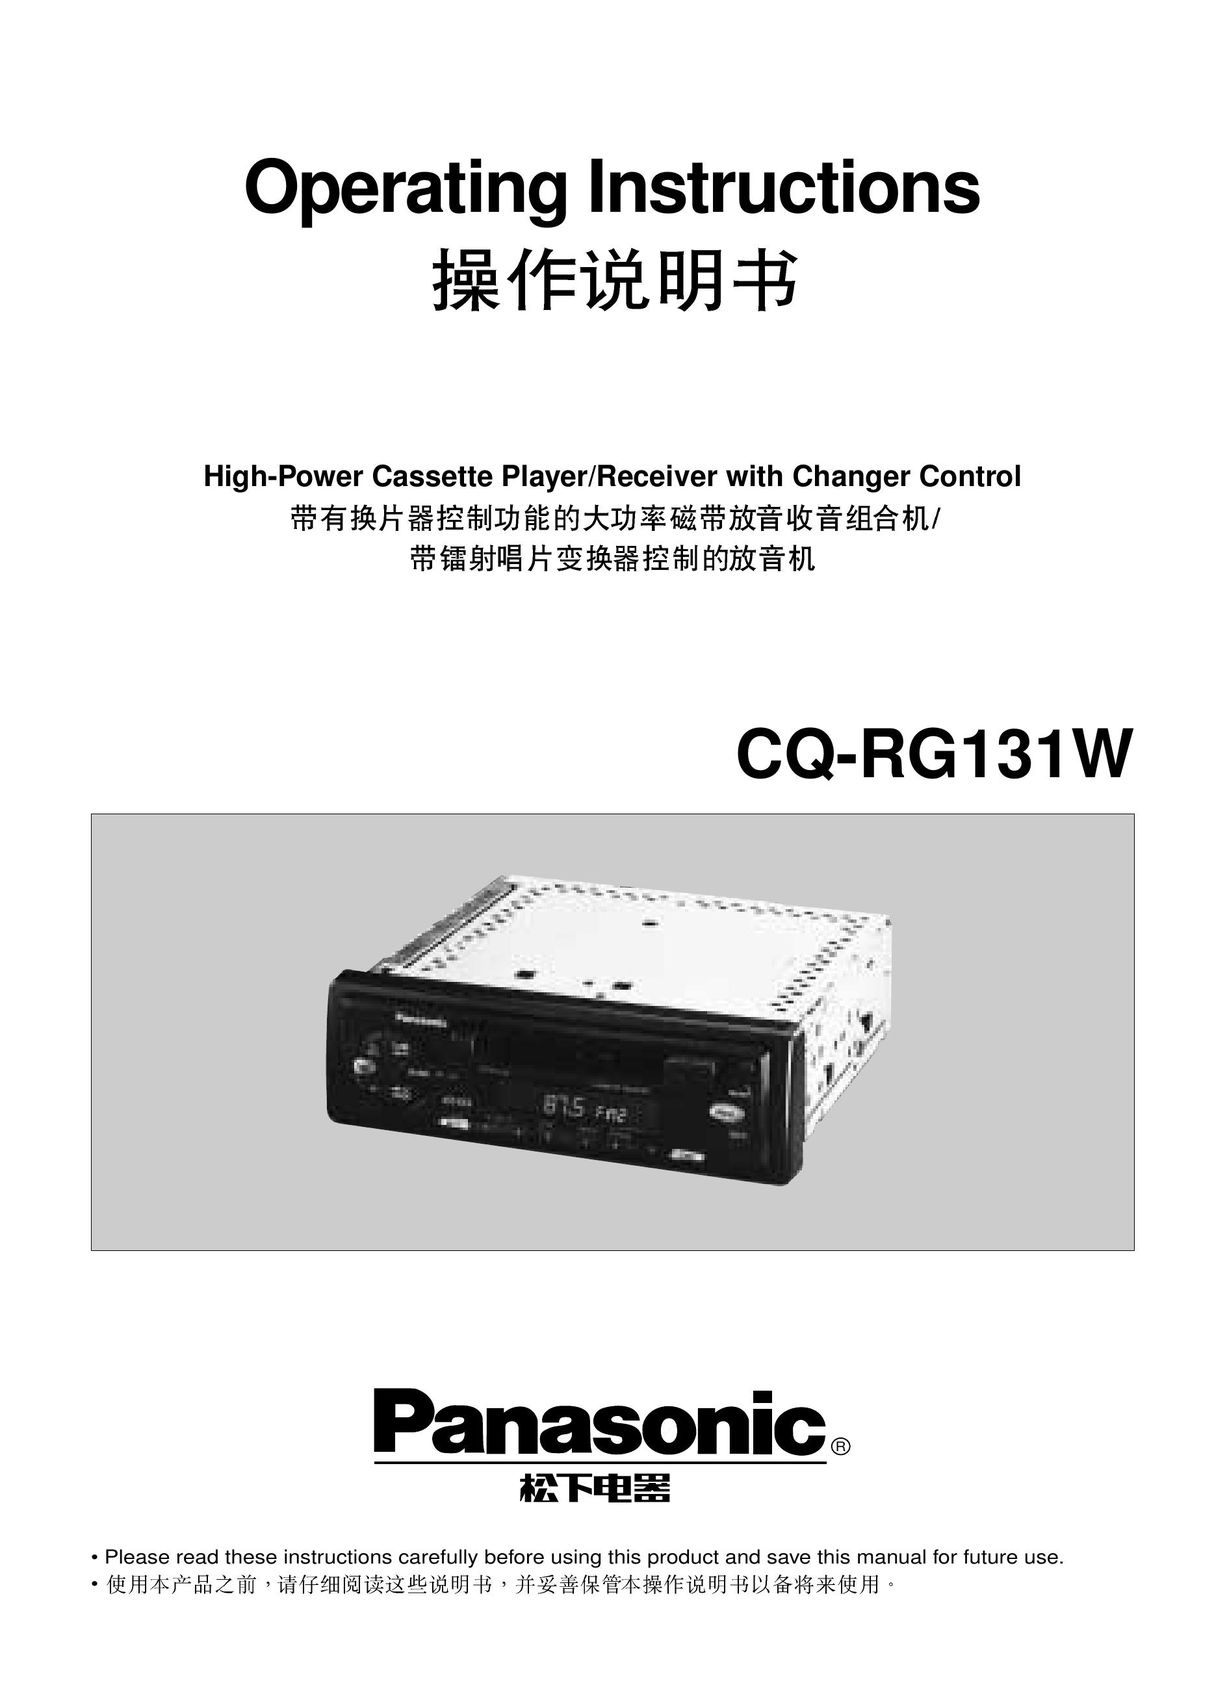 Panasonic CQ-RG131W Power Supply User Manual